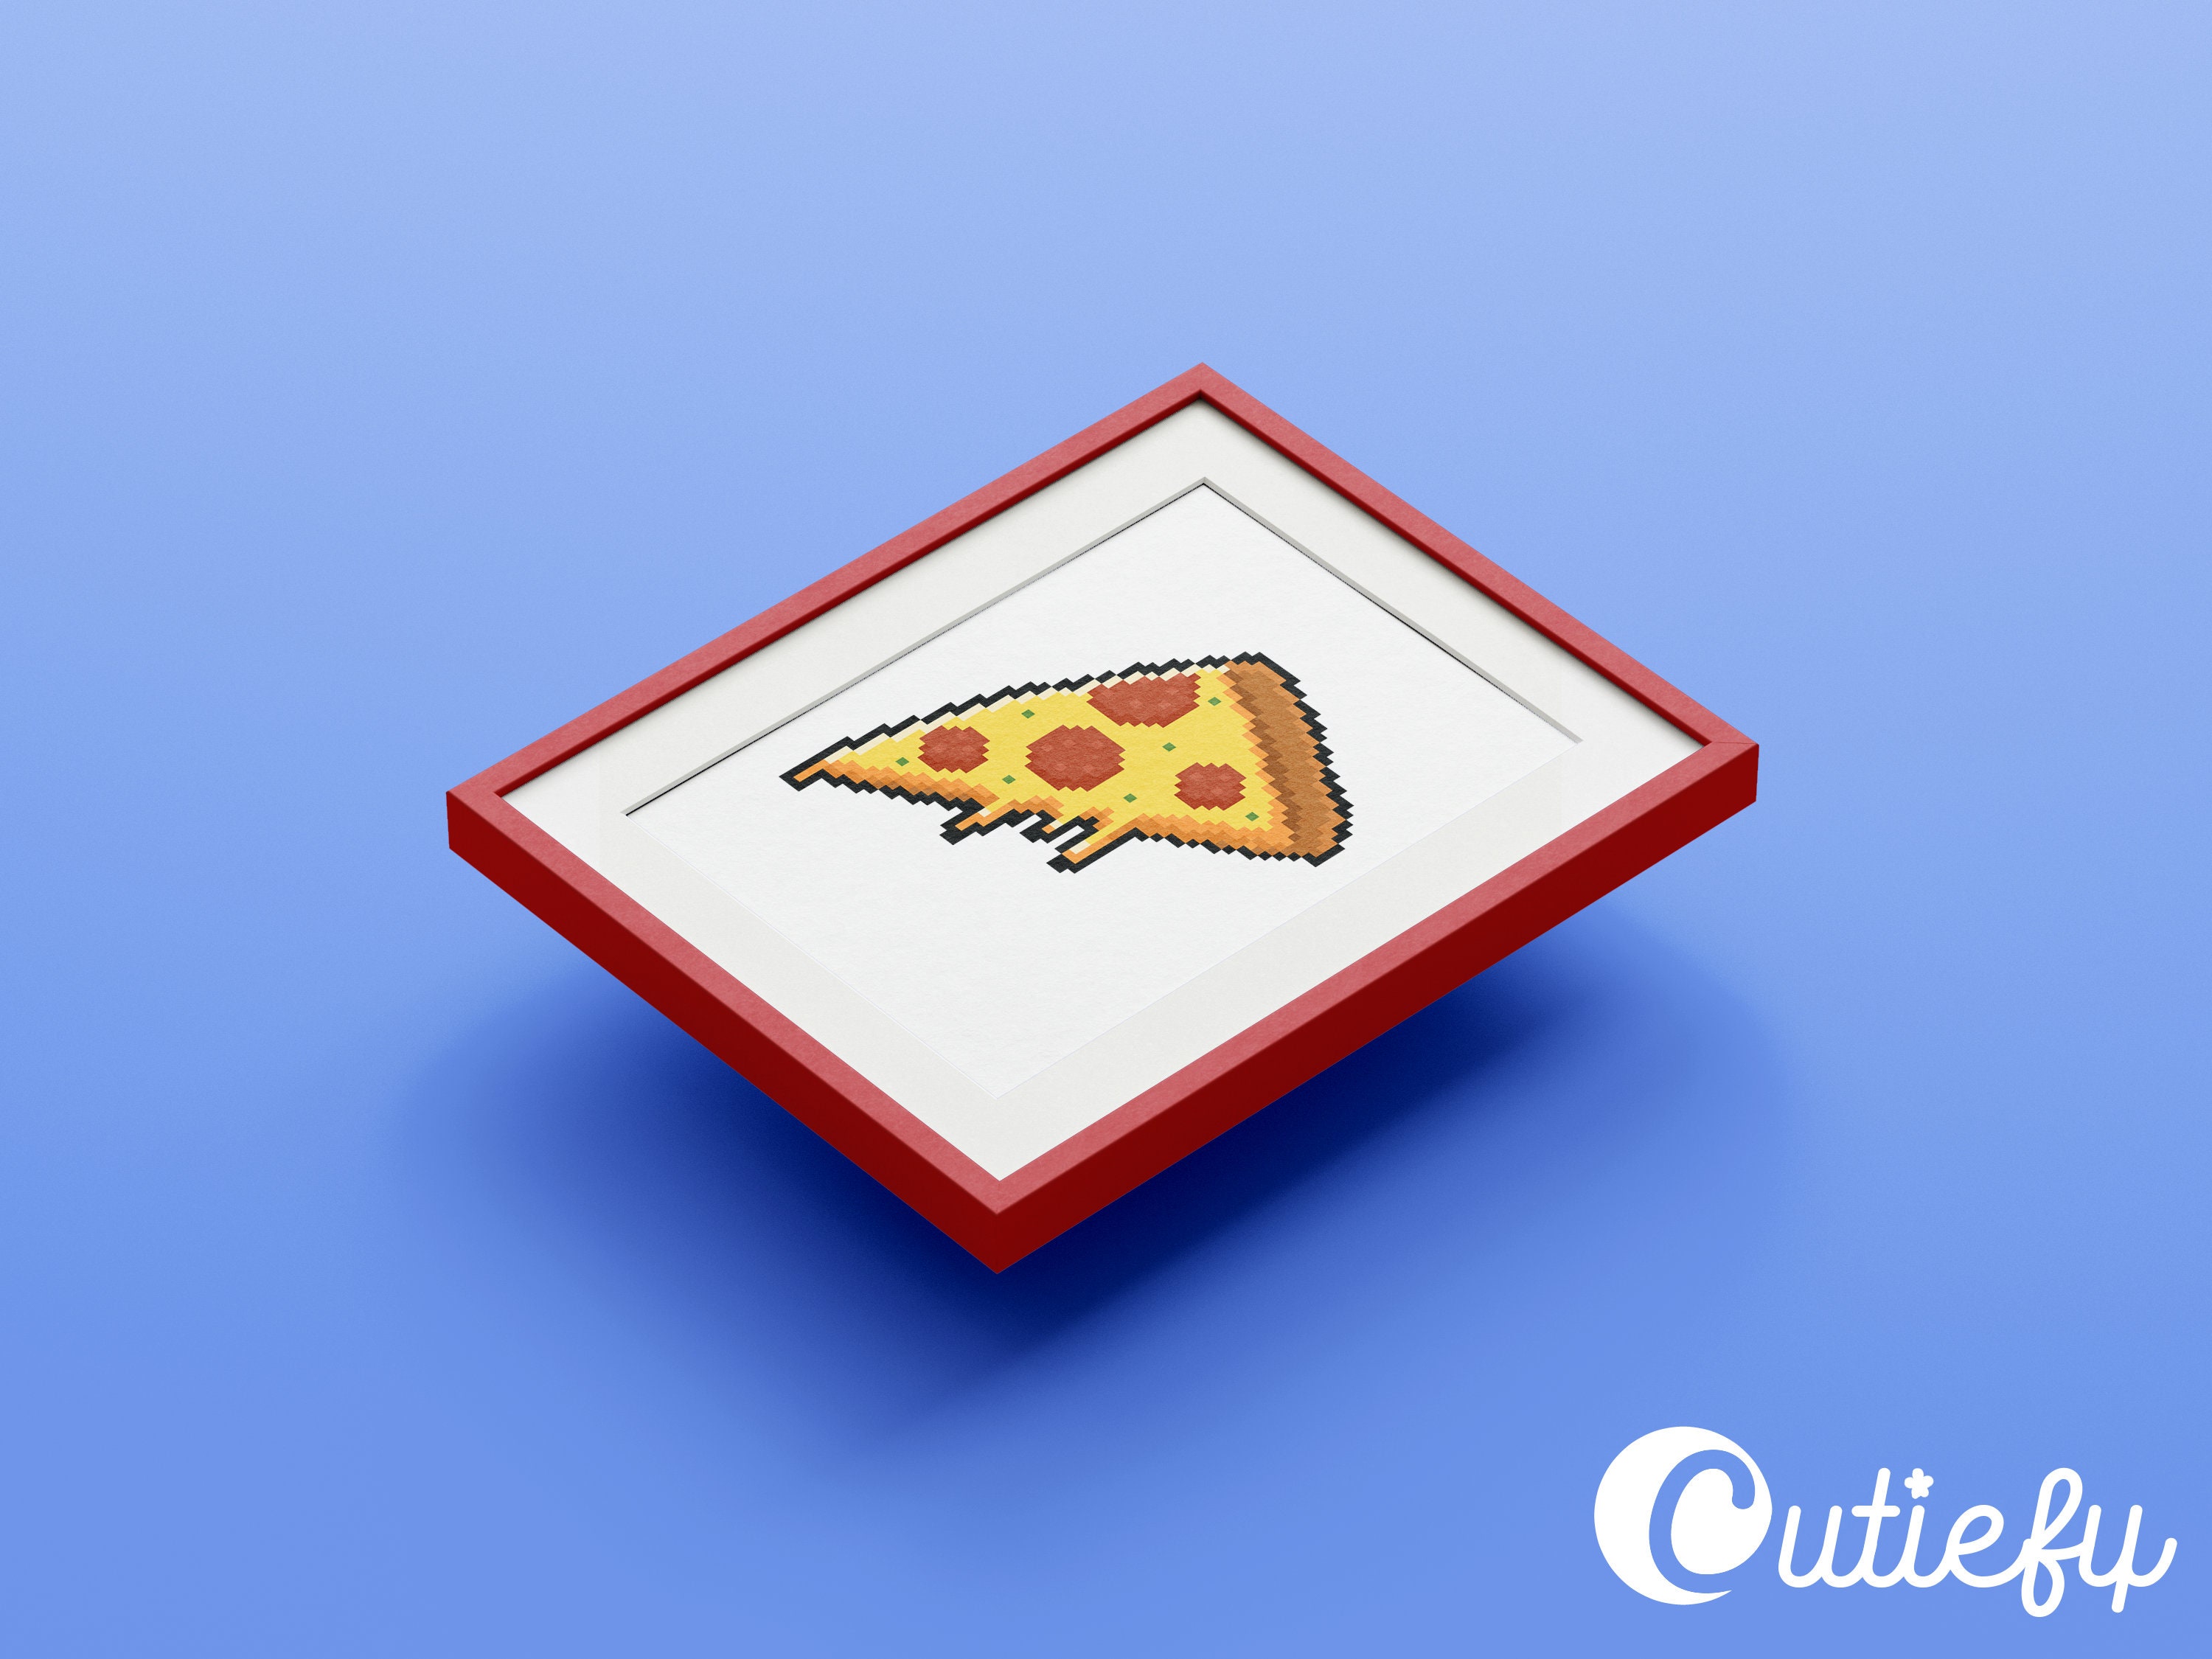 Pixel Piece Pizza Cheese Pepperoni Italian Stock Illustration 2363122345